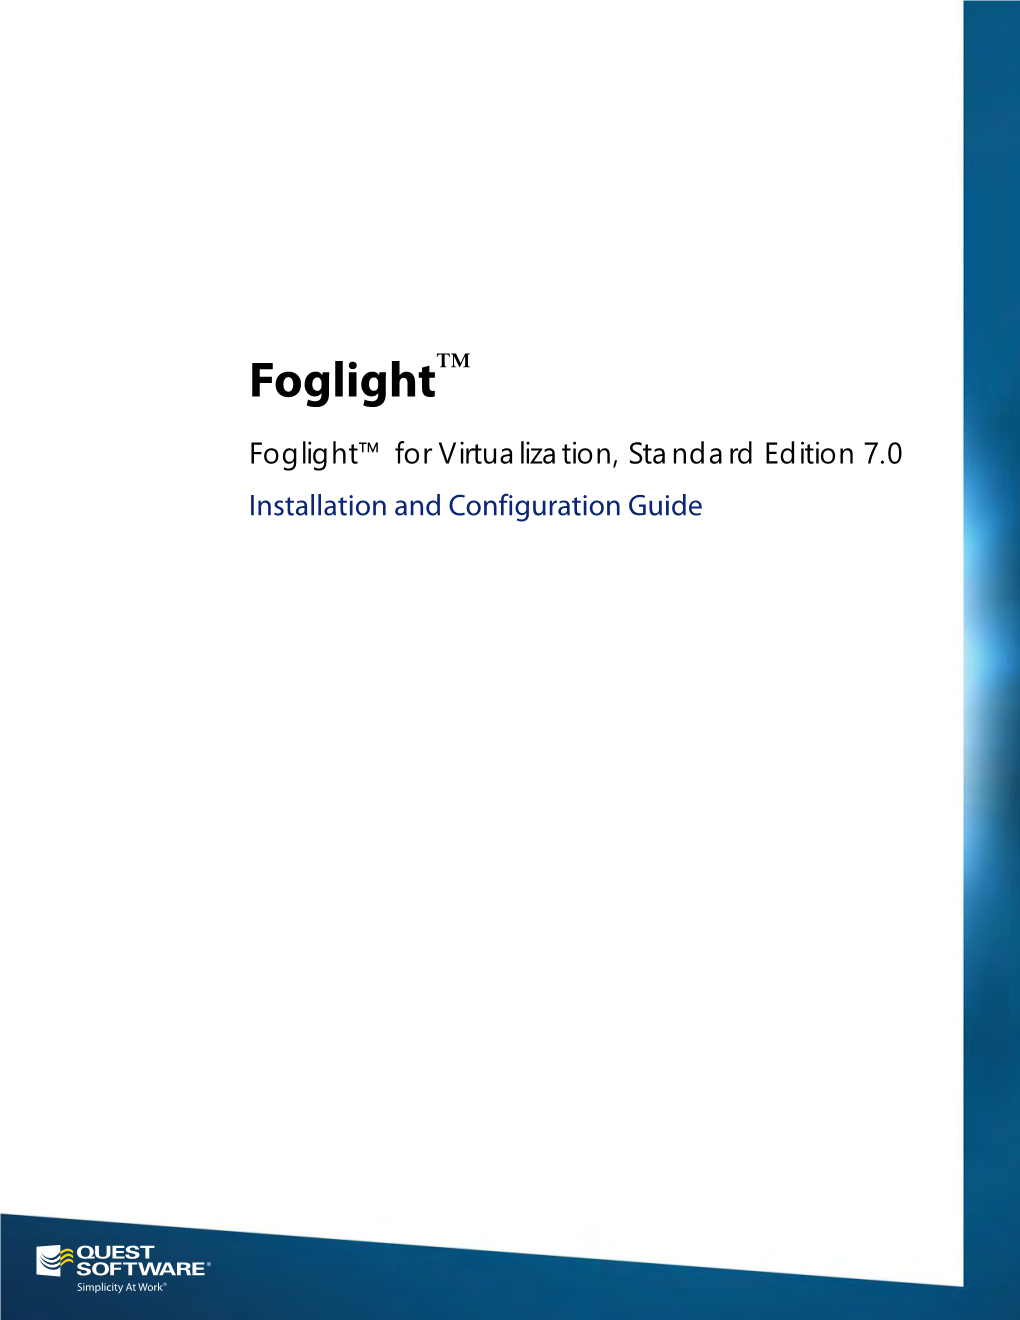 Foglight for Virtualization, Standard Edition Installation And